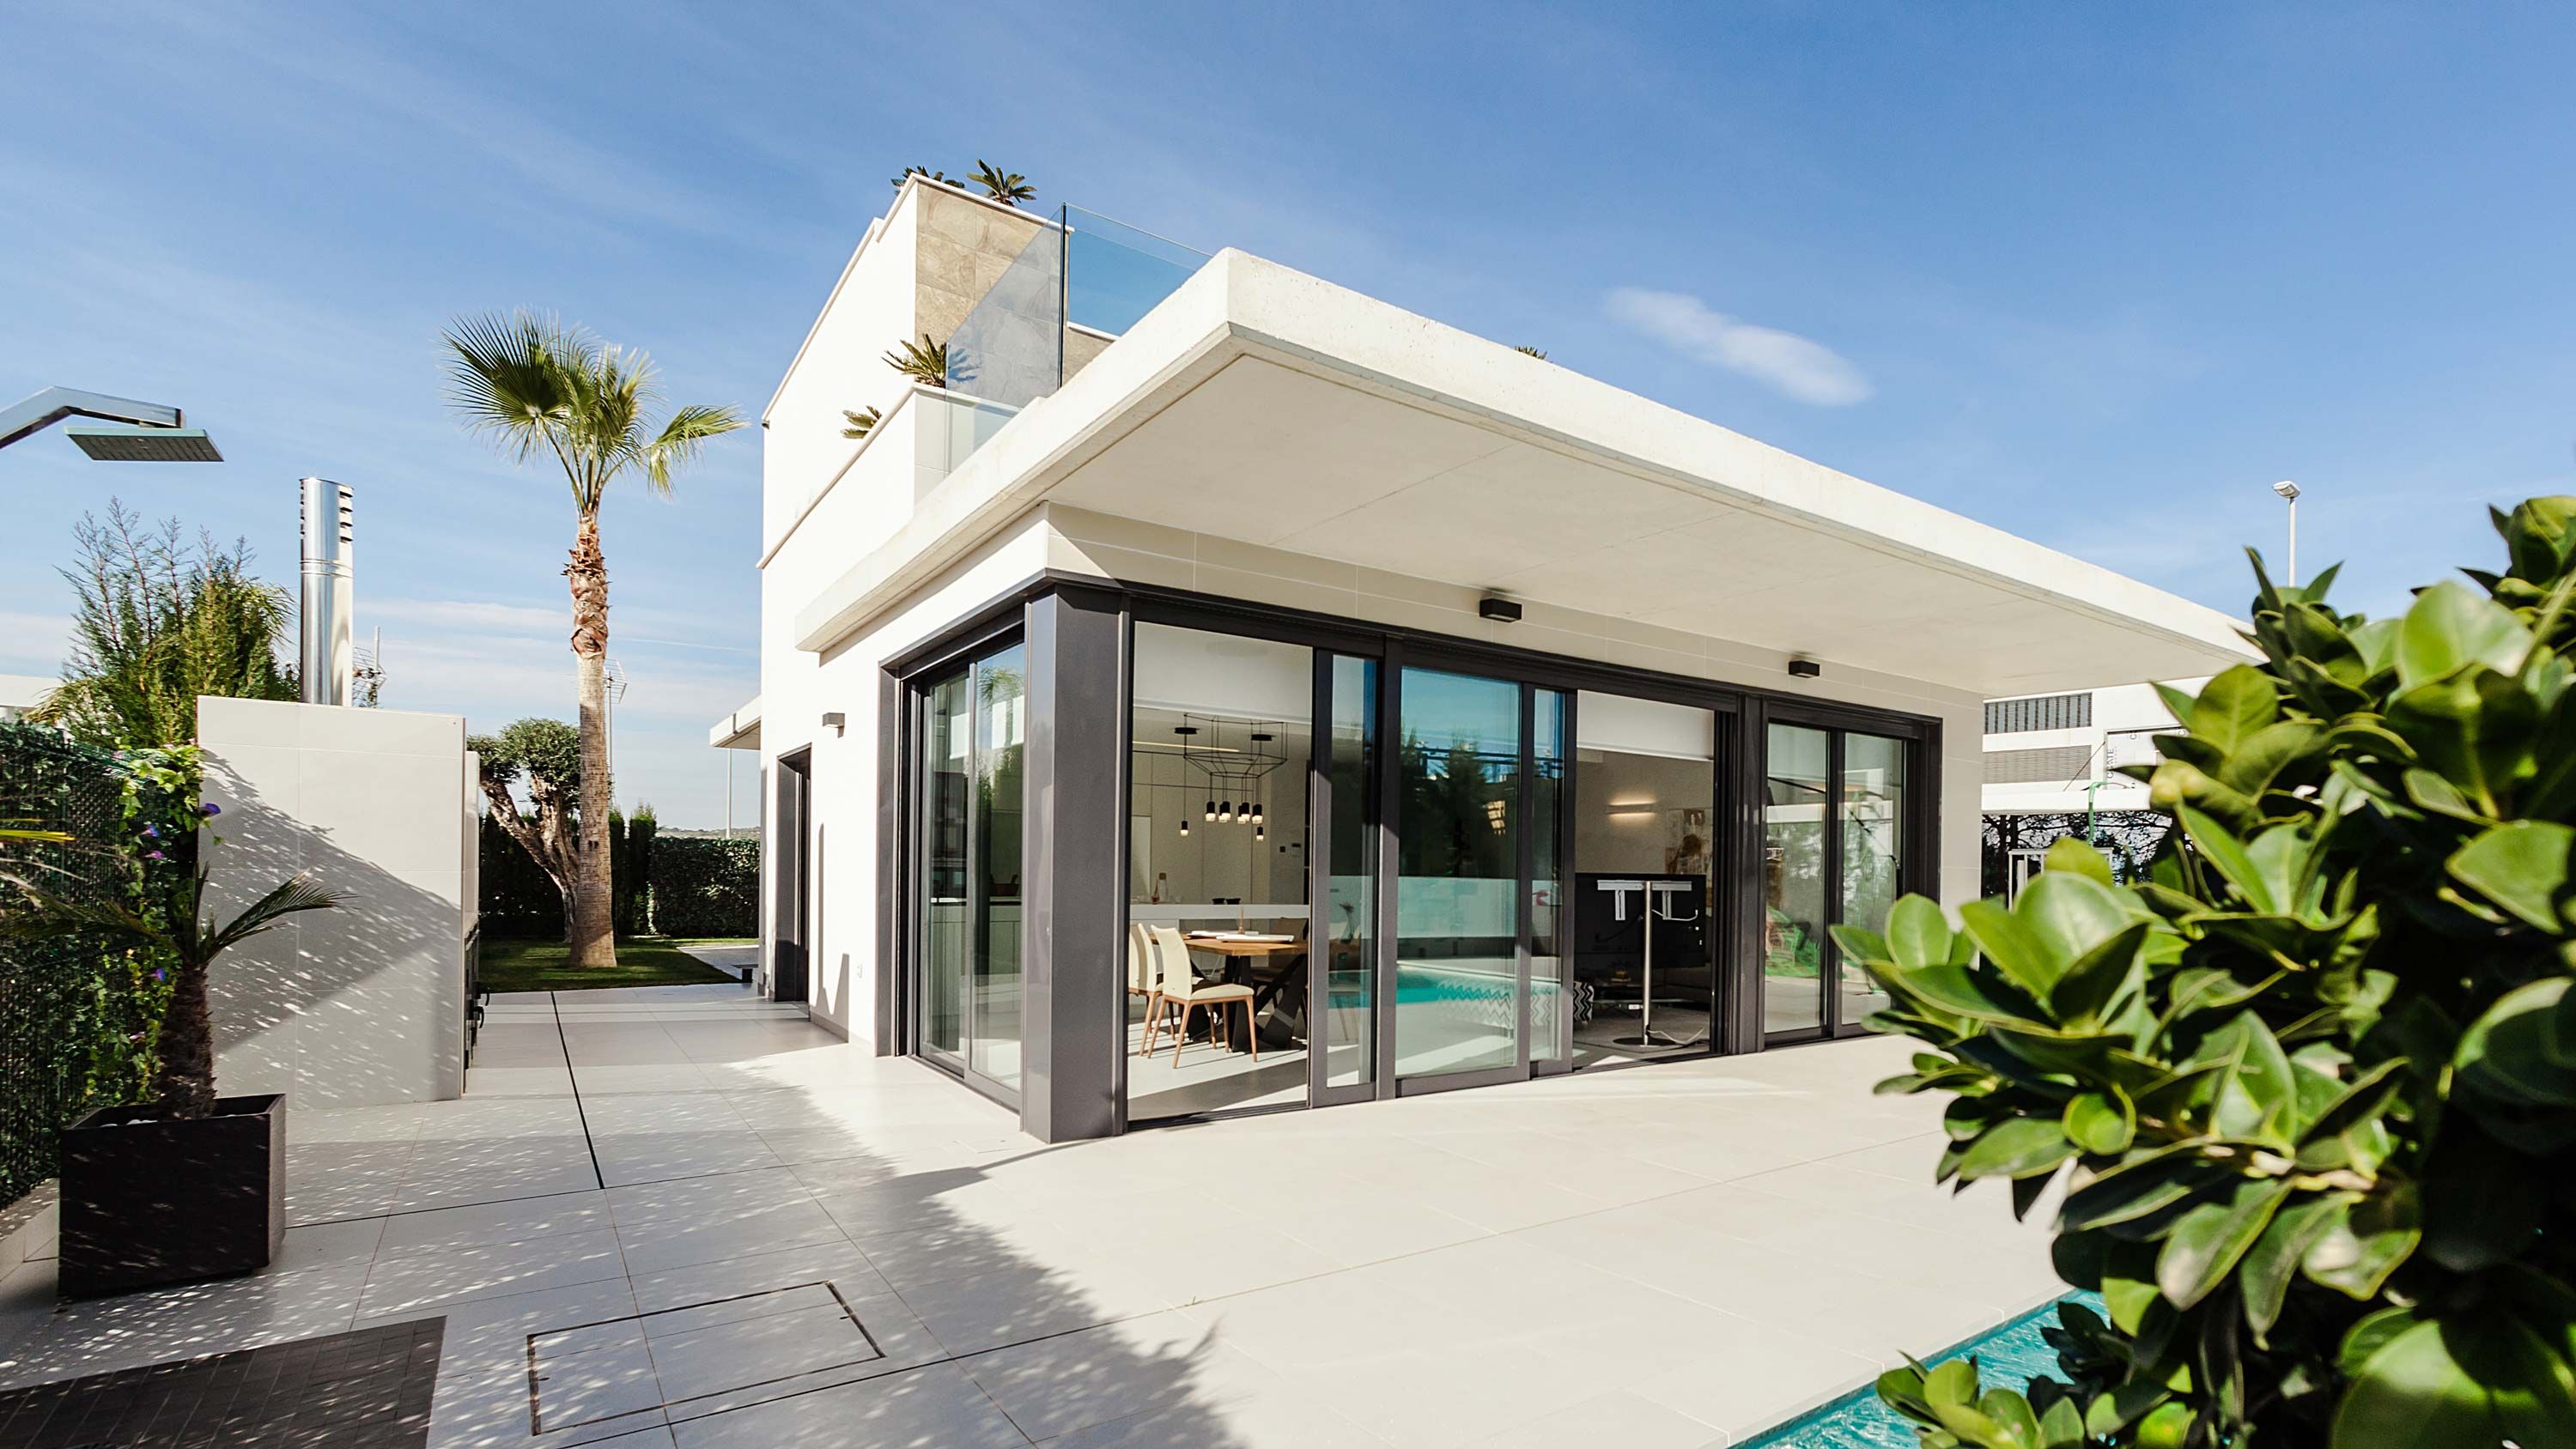 Motorized Shades Santa Monica CA, smart home automation california, coastal homes, interior designer, architect, smart homes, whole home